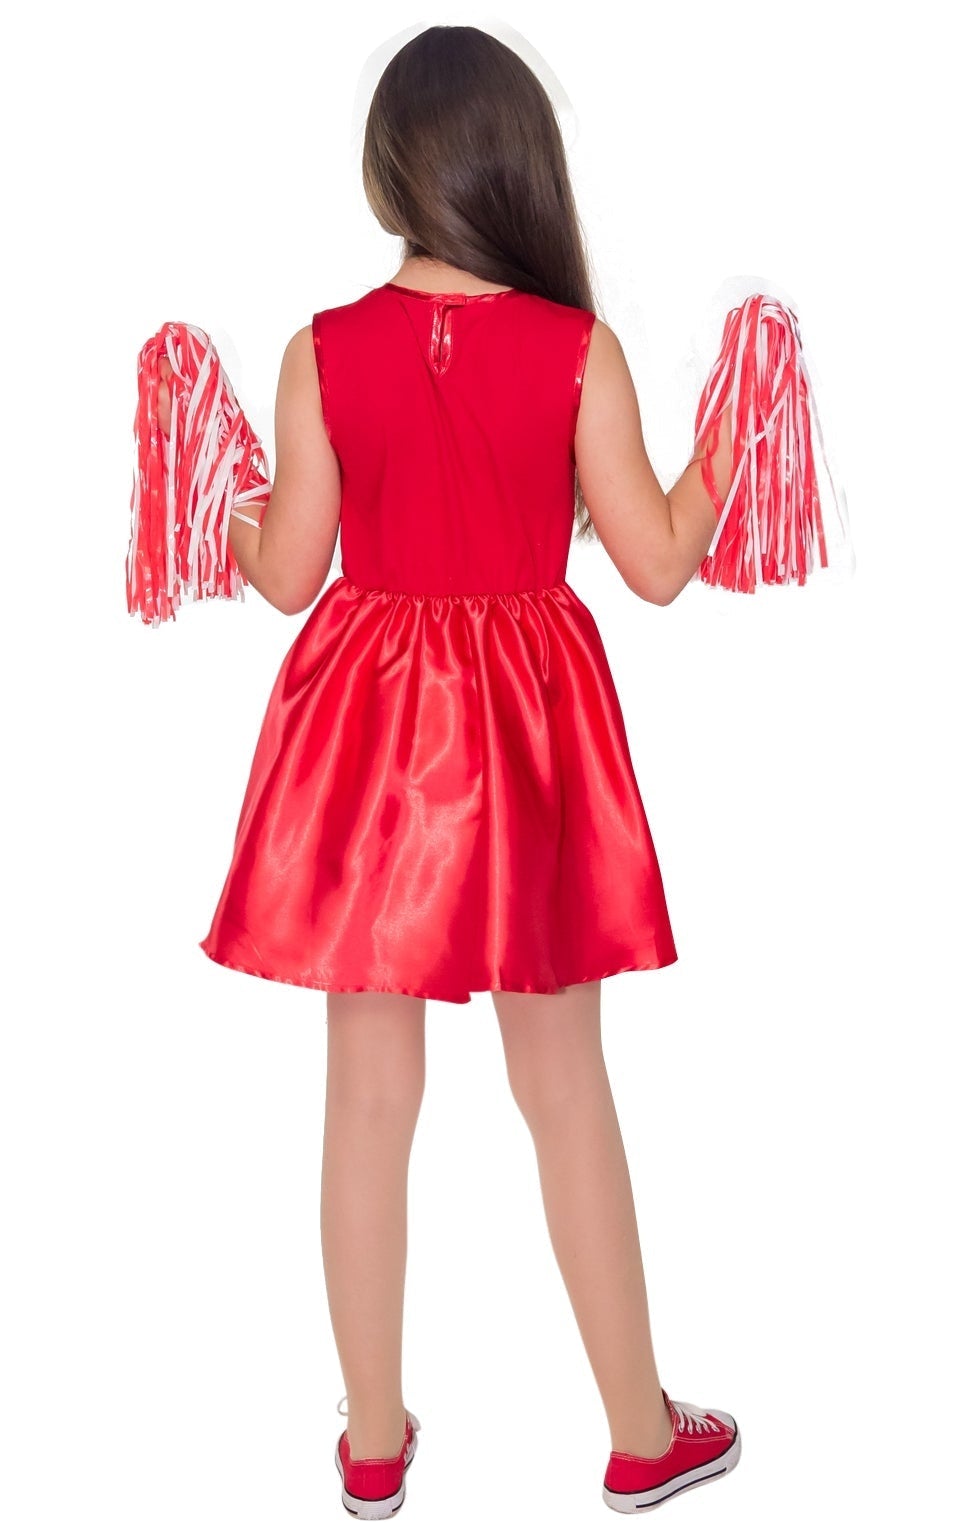 WilDCat Cheerleader Dress and Pom Poms_3 rub-3010867-8